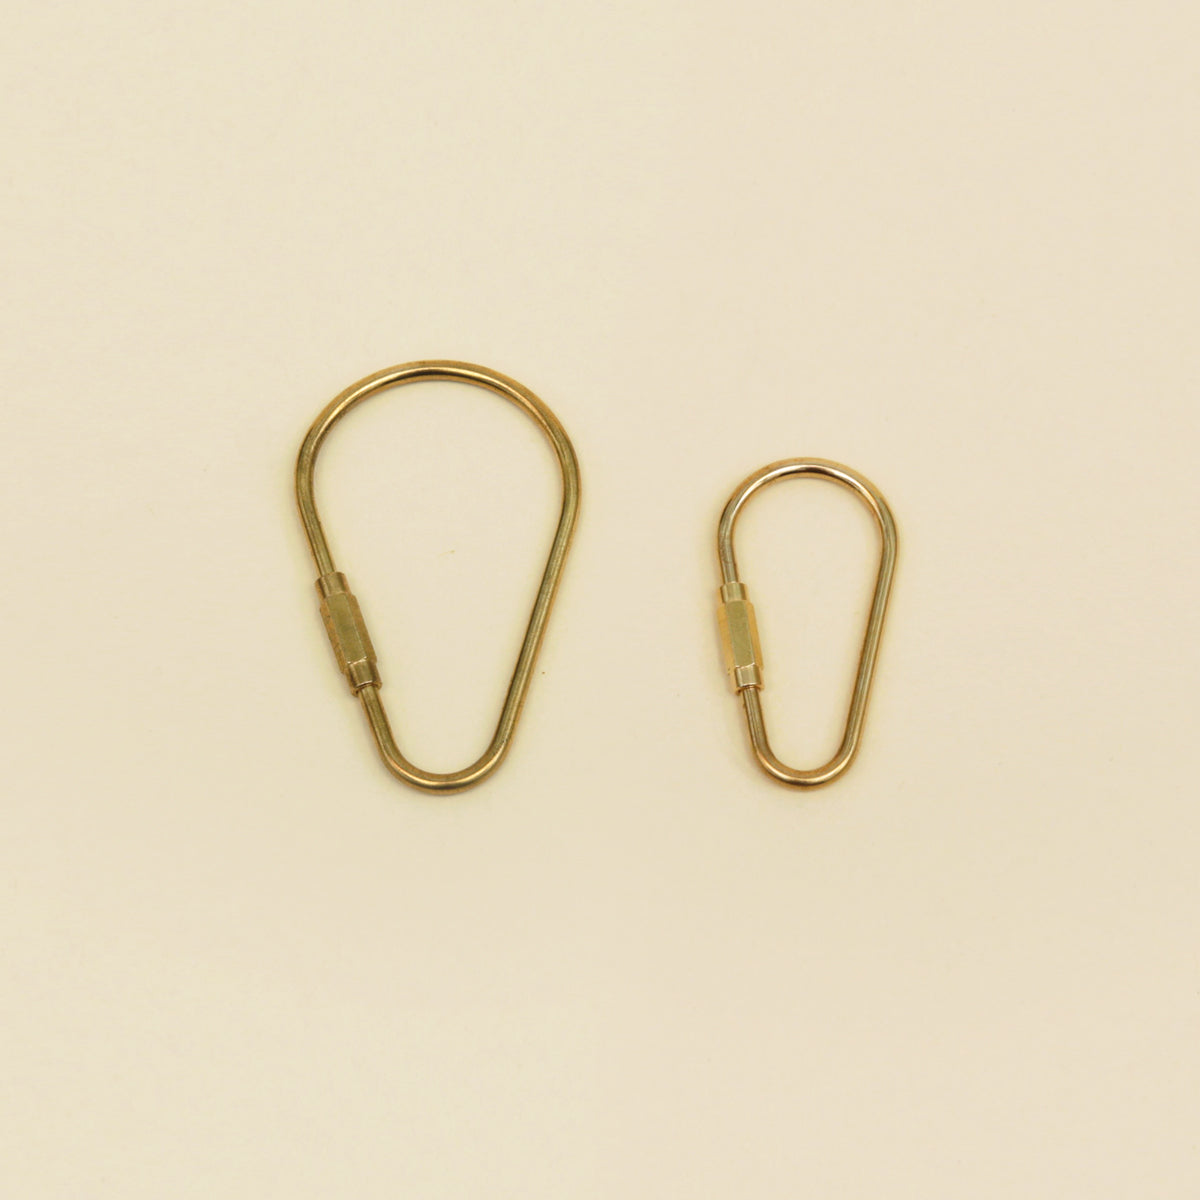 Brass Key Ring - Set of 2